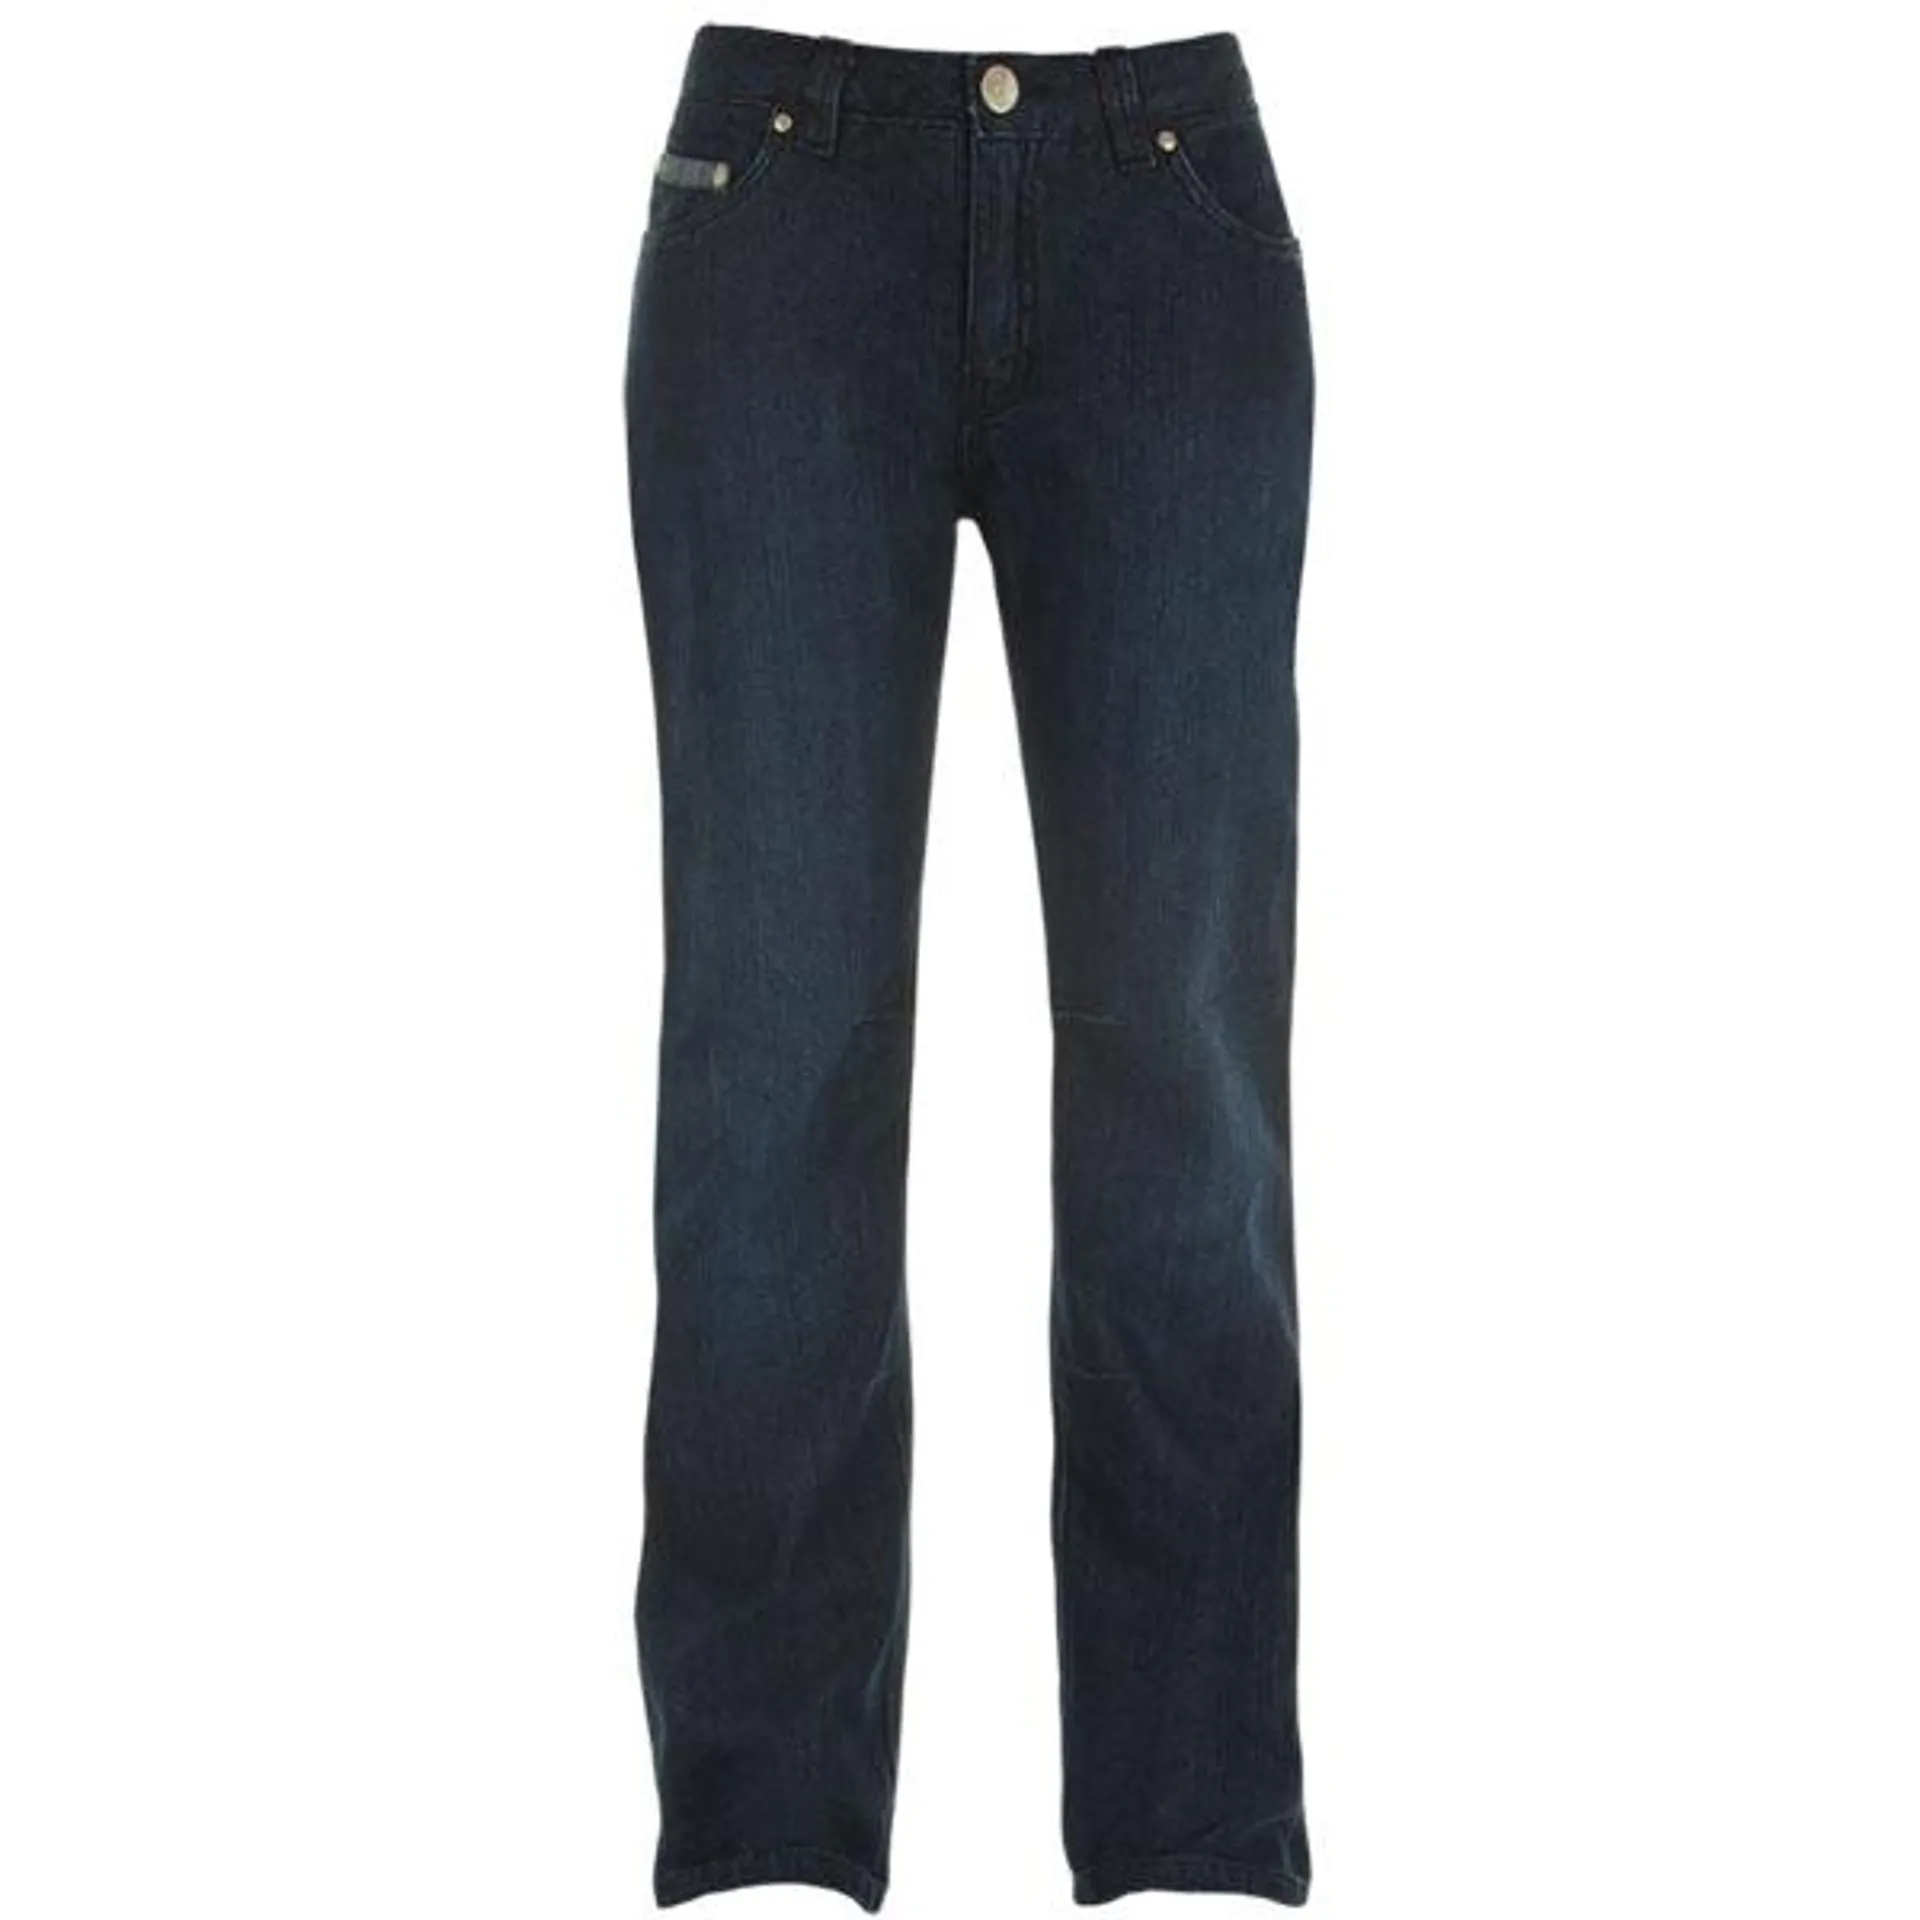 Bull-it Covec SR6 Ladies Italian Jeans - Blue